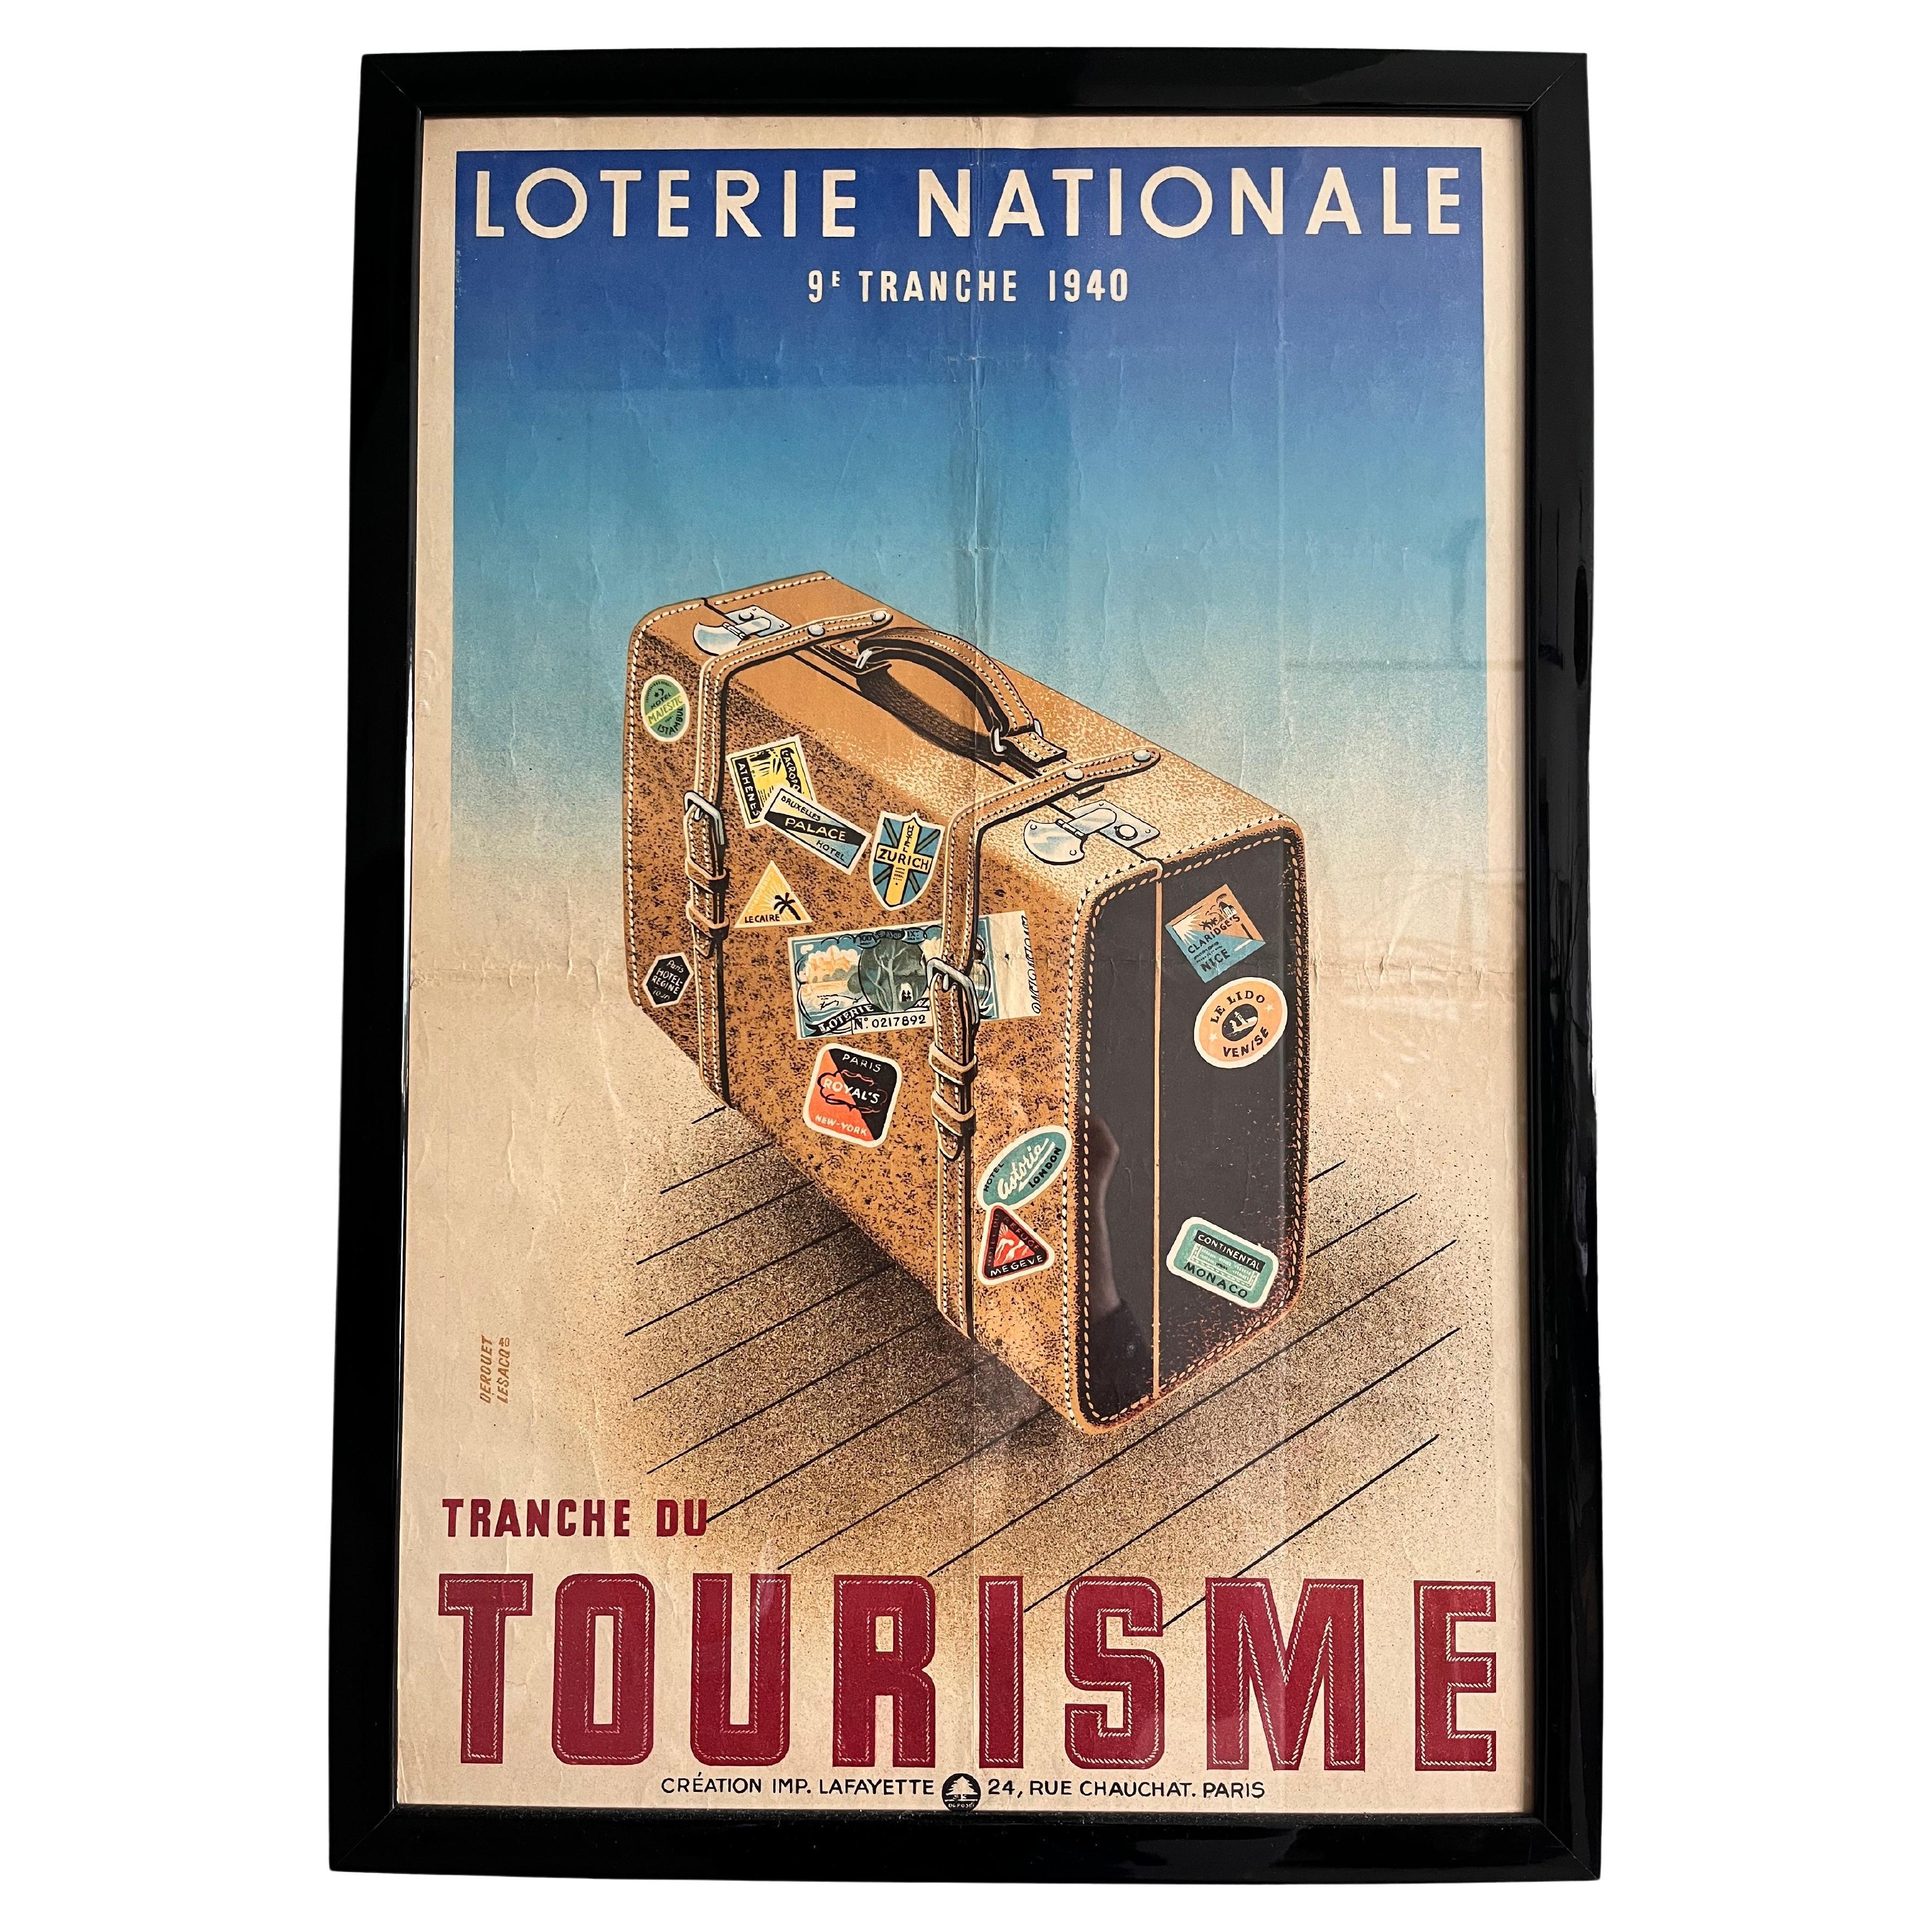 Original poster Loterie Nationale 9E Tranche 1940 by Artist Derouet Lesacq For Sale